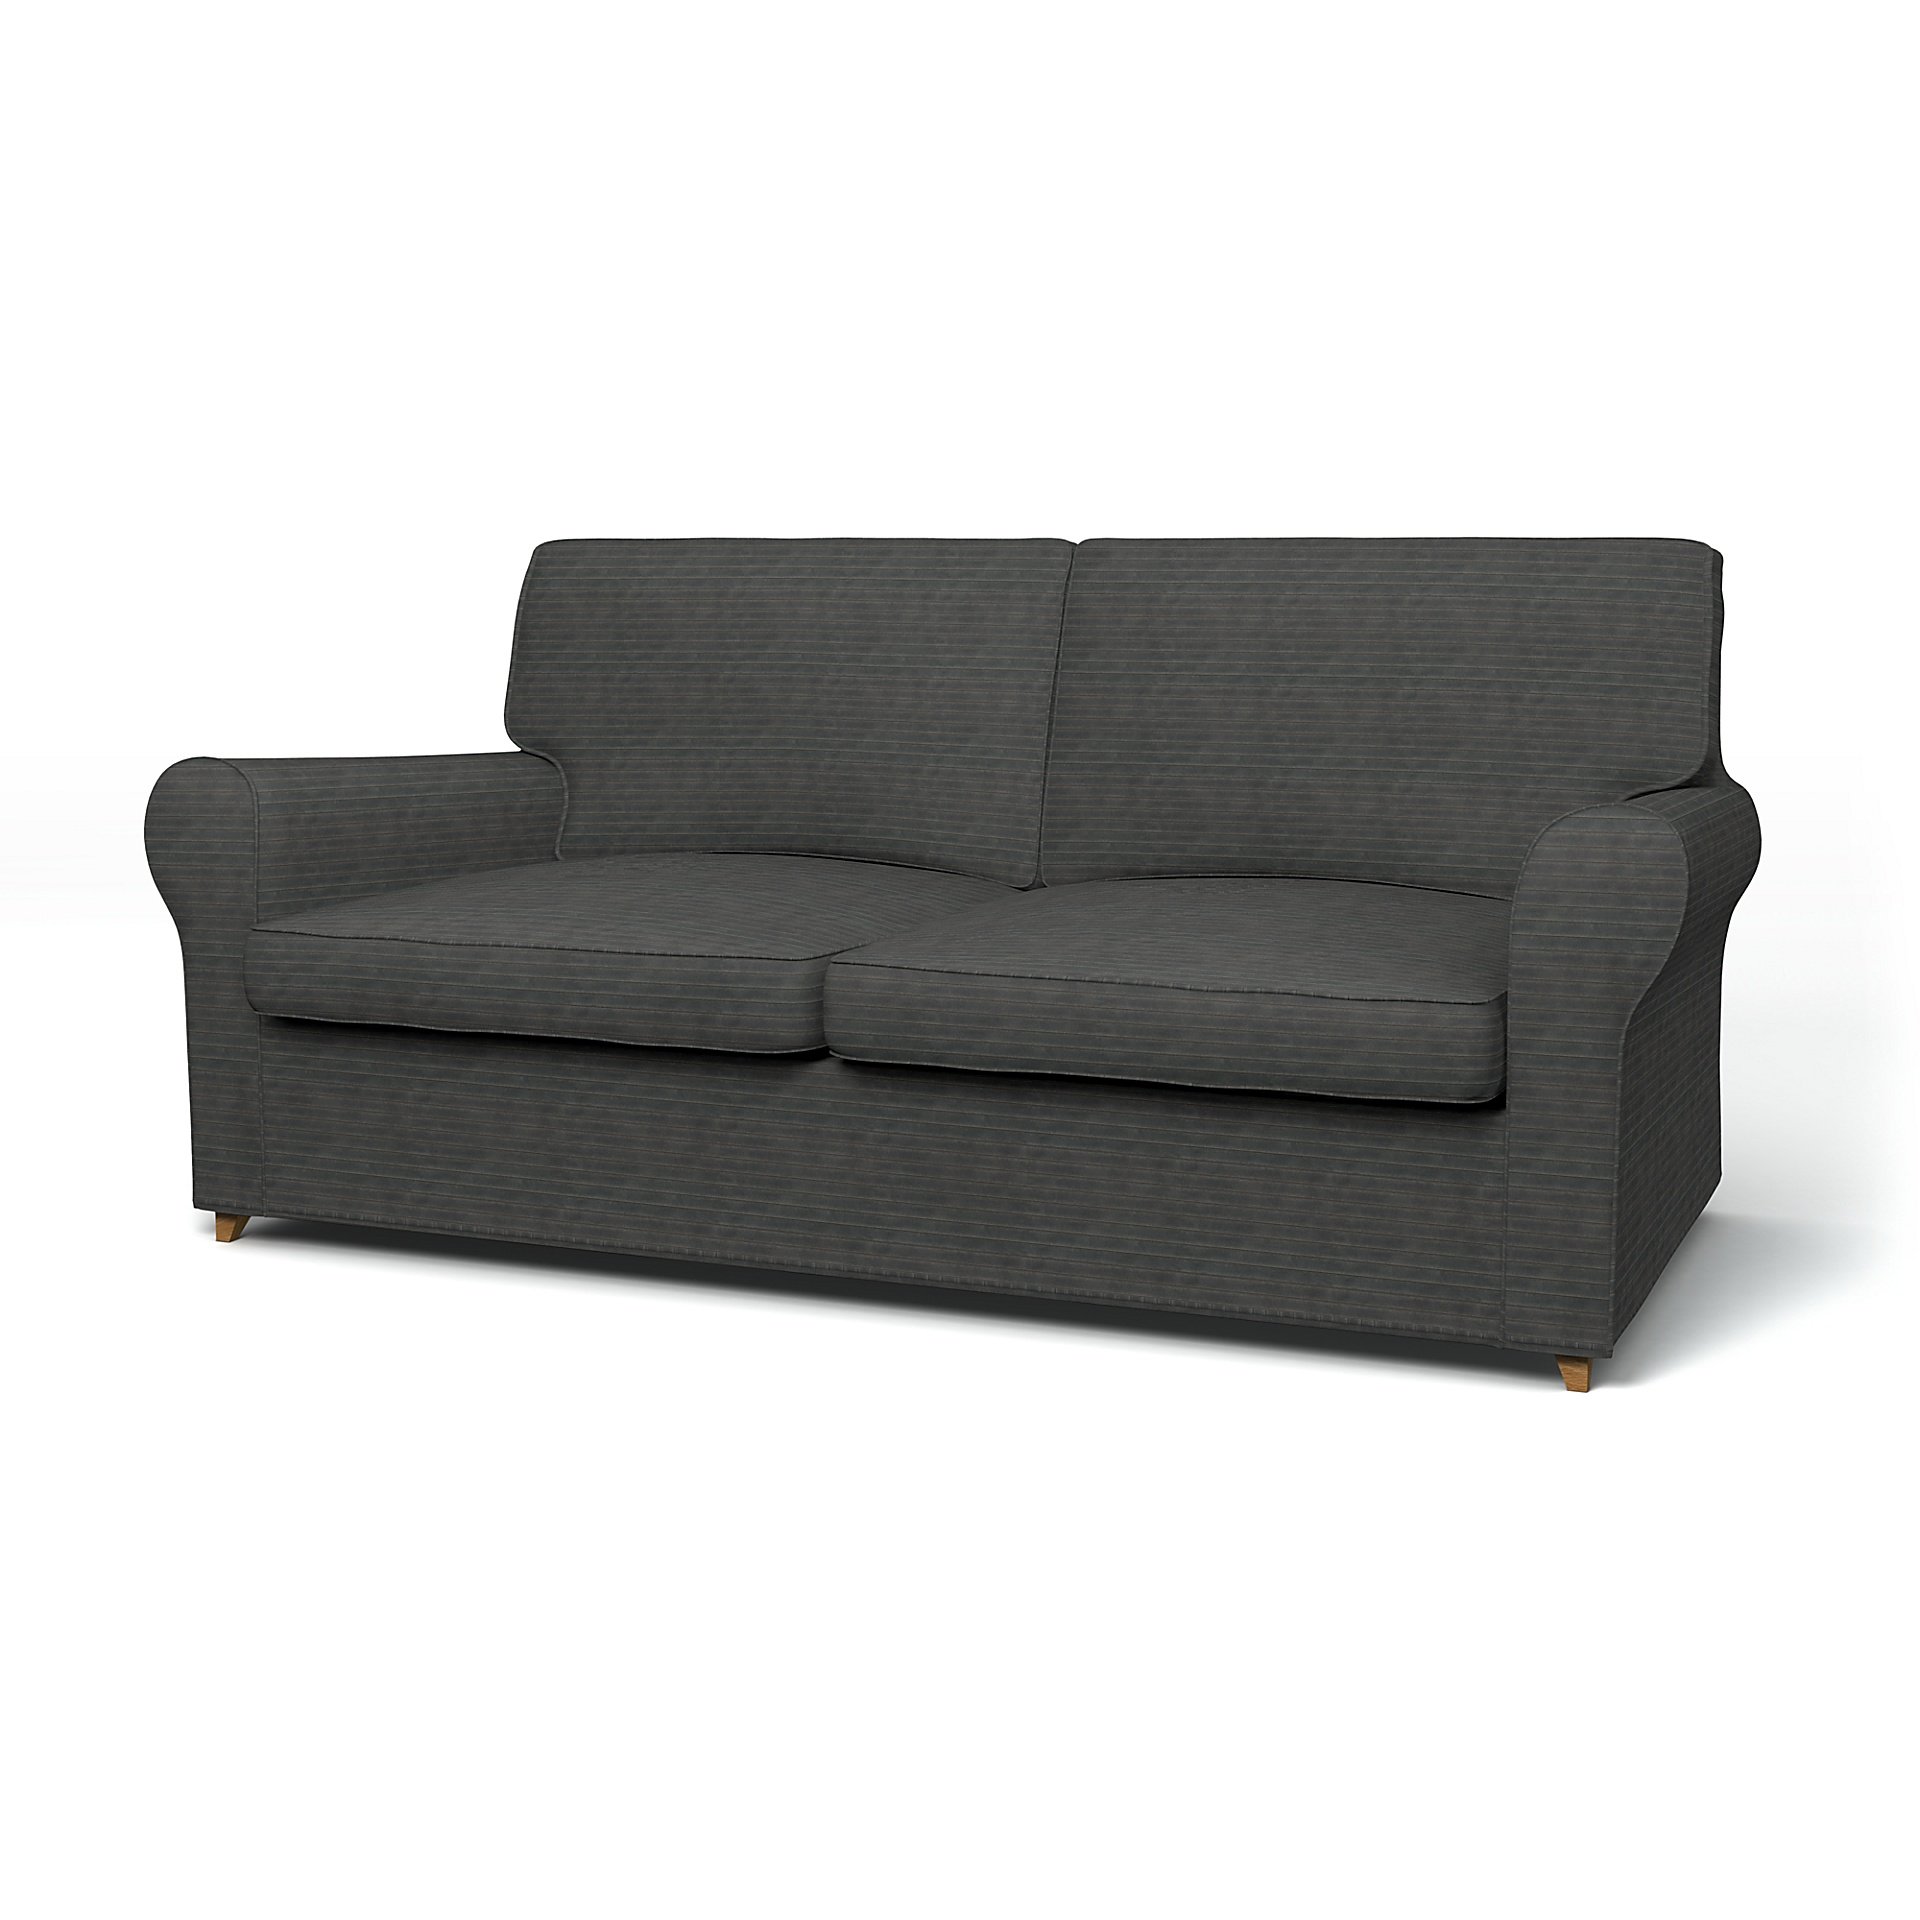 IKEA - Angby Sofa Bed Cover, Licorice, Corduroy - Bemz